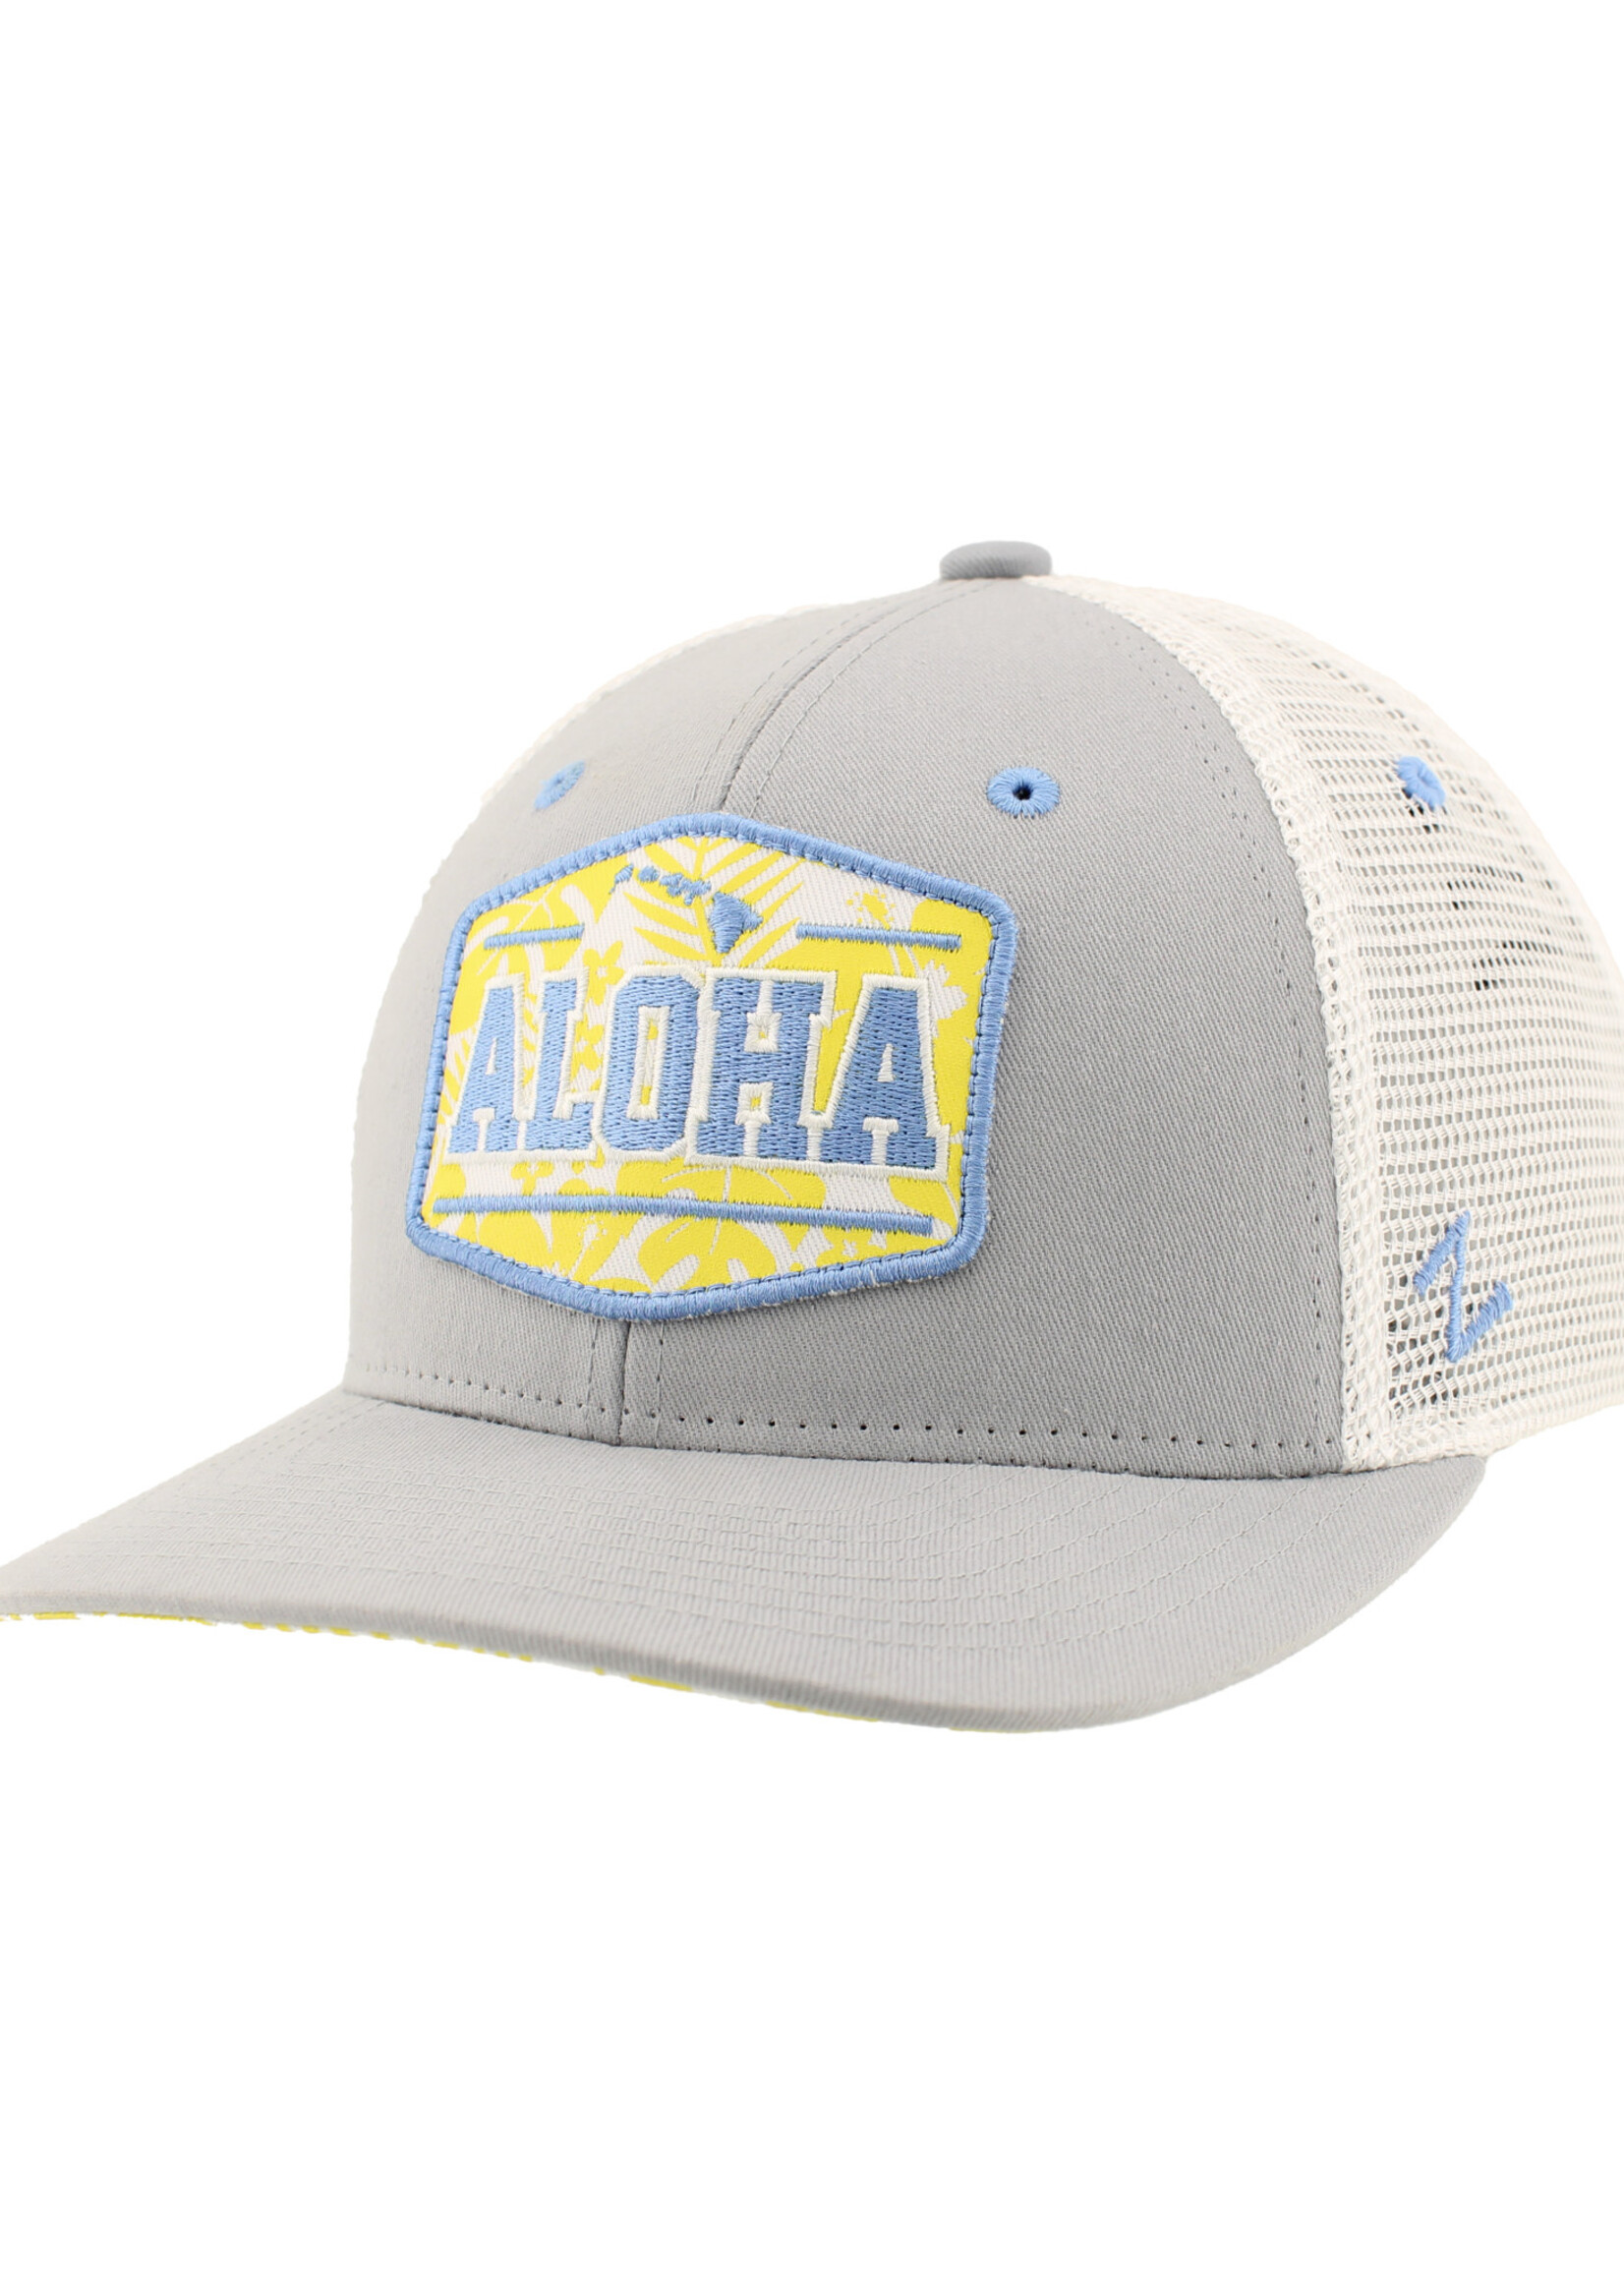 Zephyr Aloha Grey/White With Islands Cap